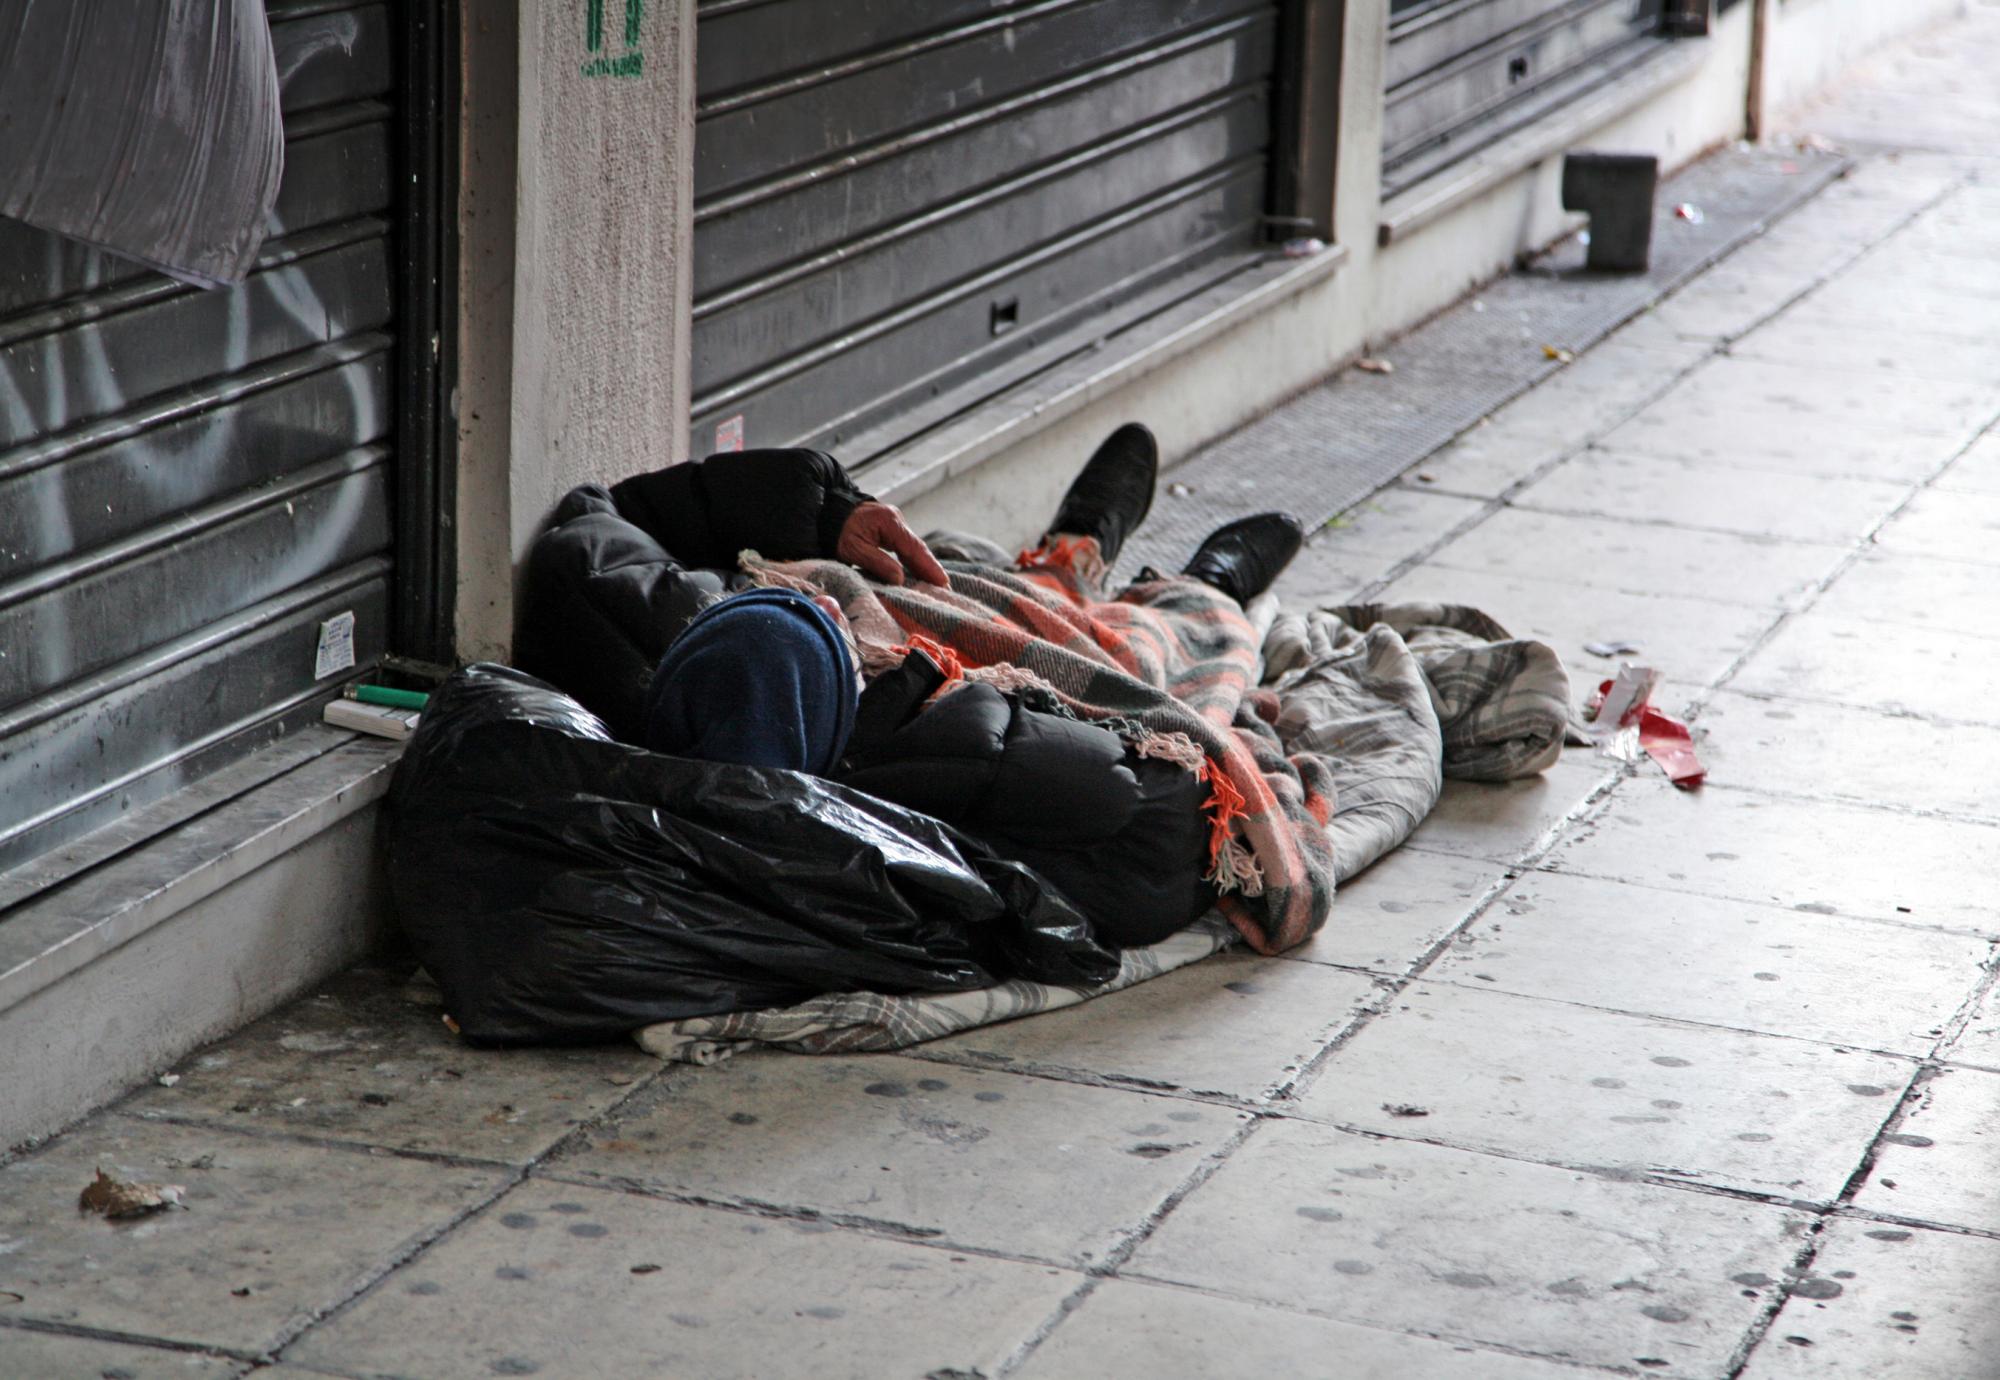 Homeless man sleeping on the street